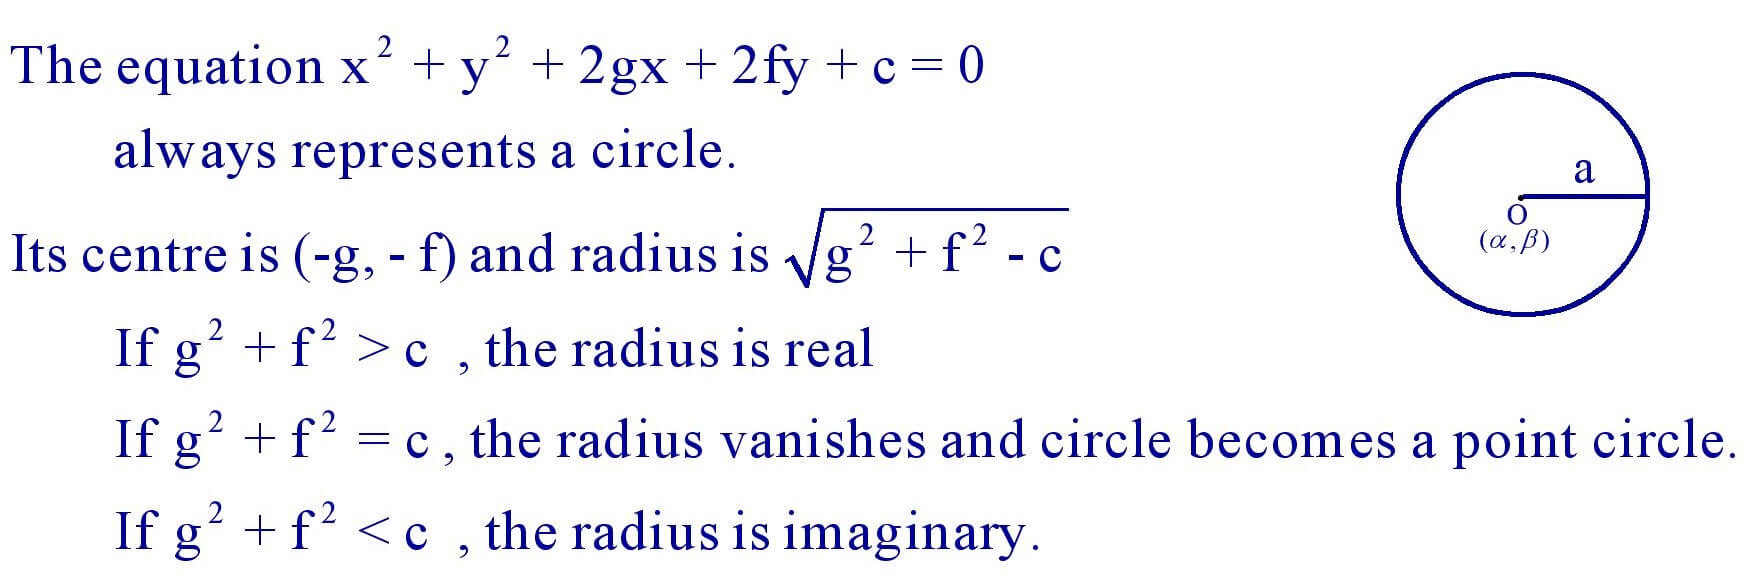 General Equation of Circle